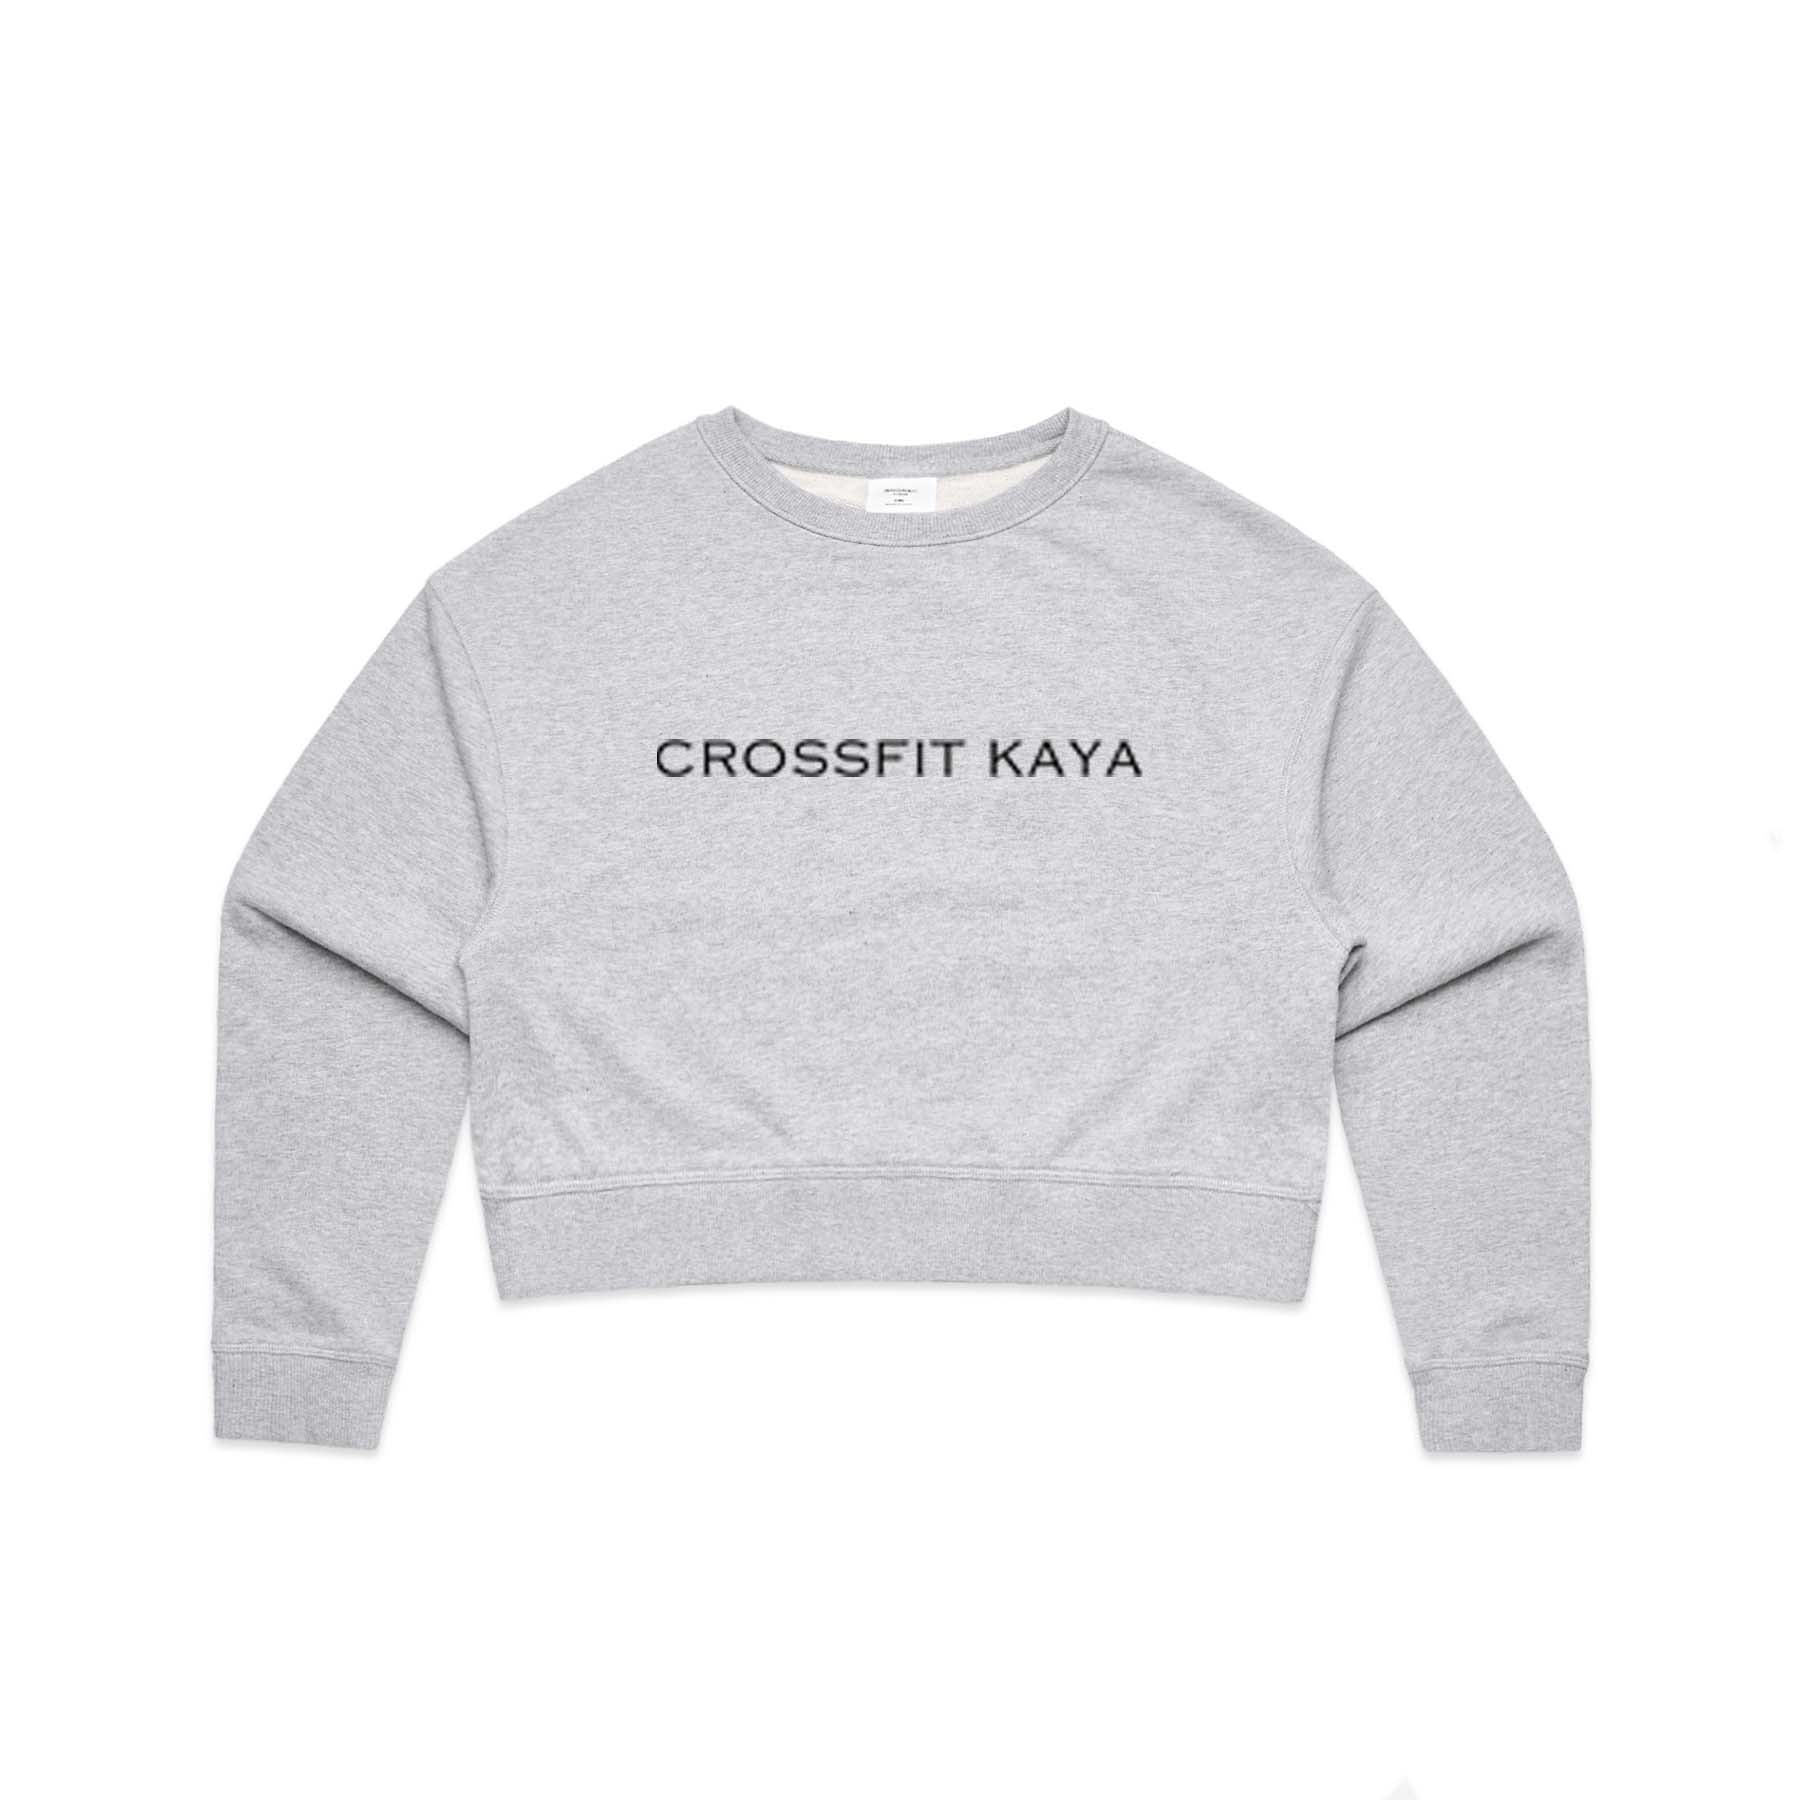 Kaya Crossfit Crop Crew Double sided design 1